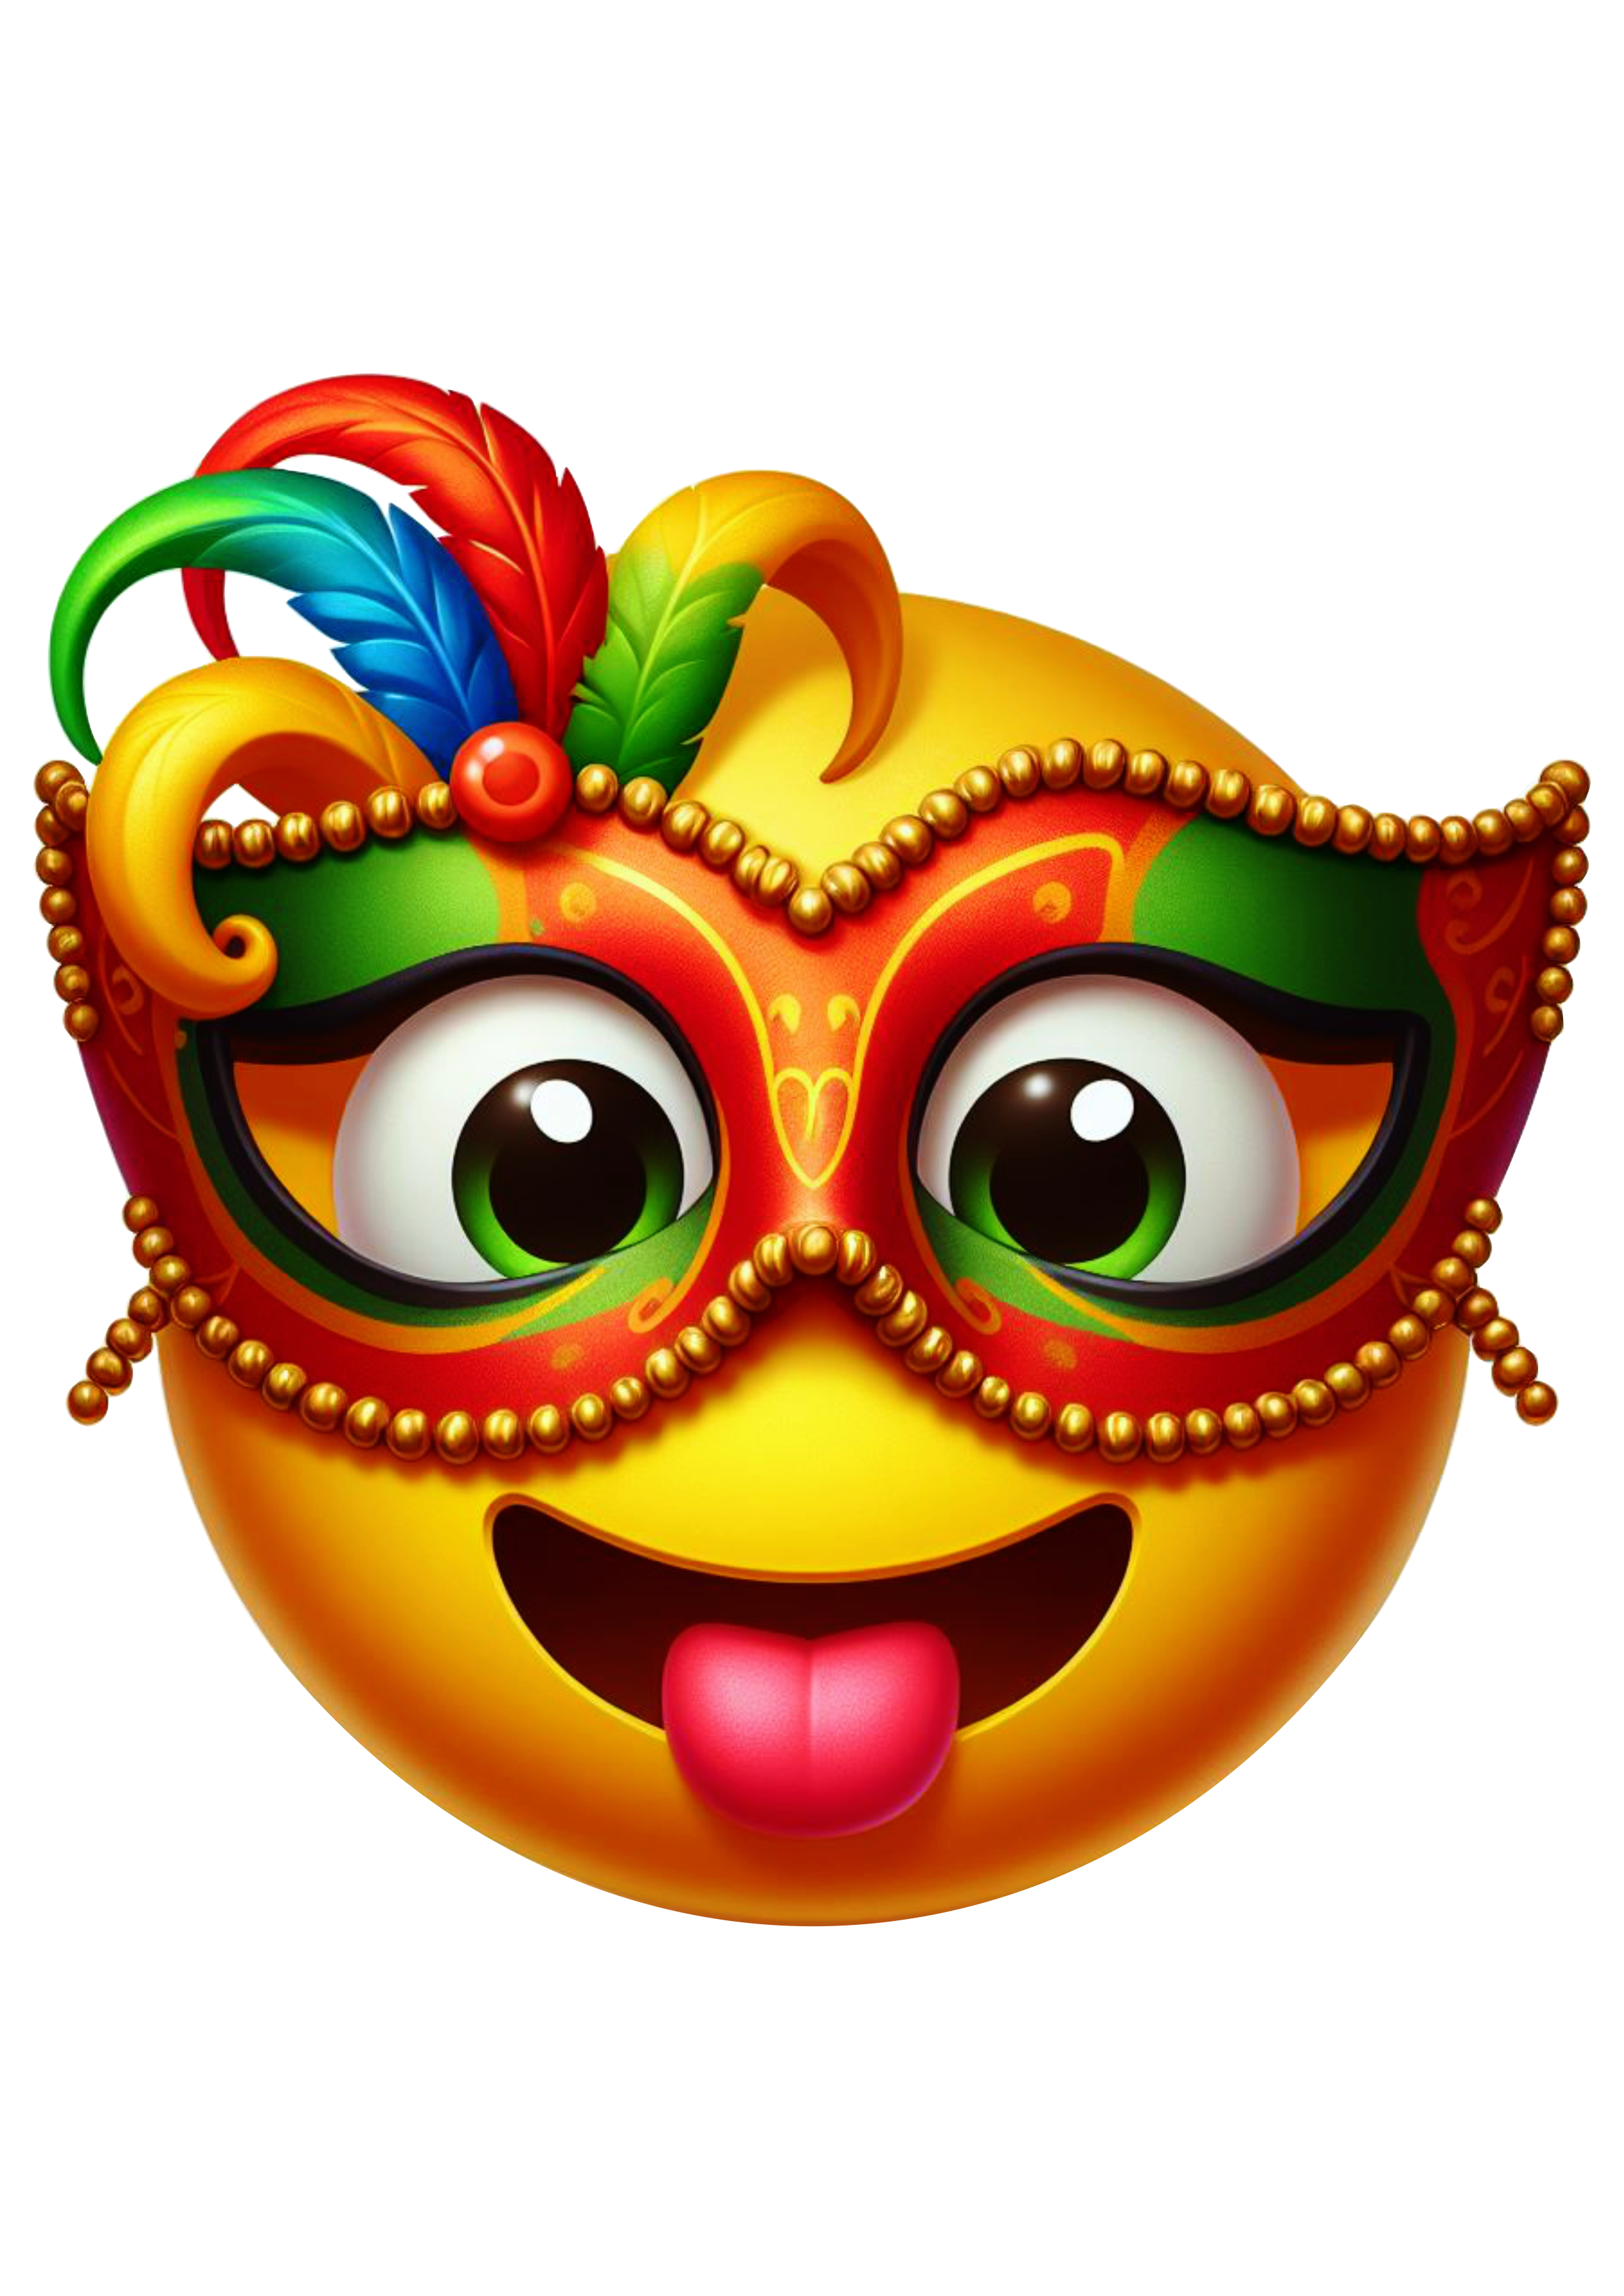 Carnaval emoji para whatsapp instagram e facebook baile de máscaras png